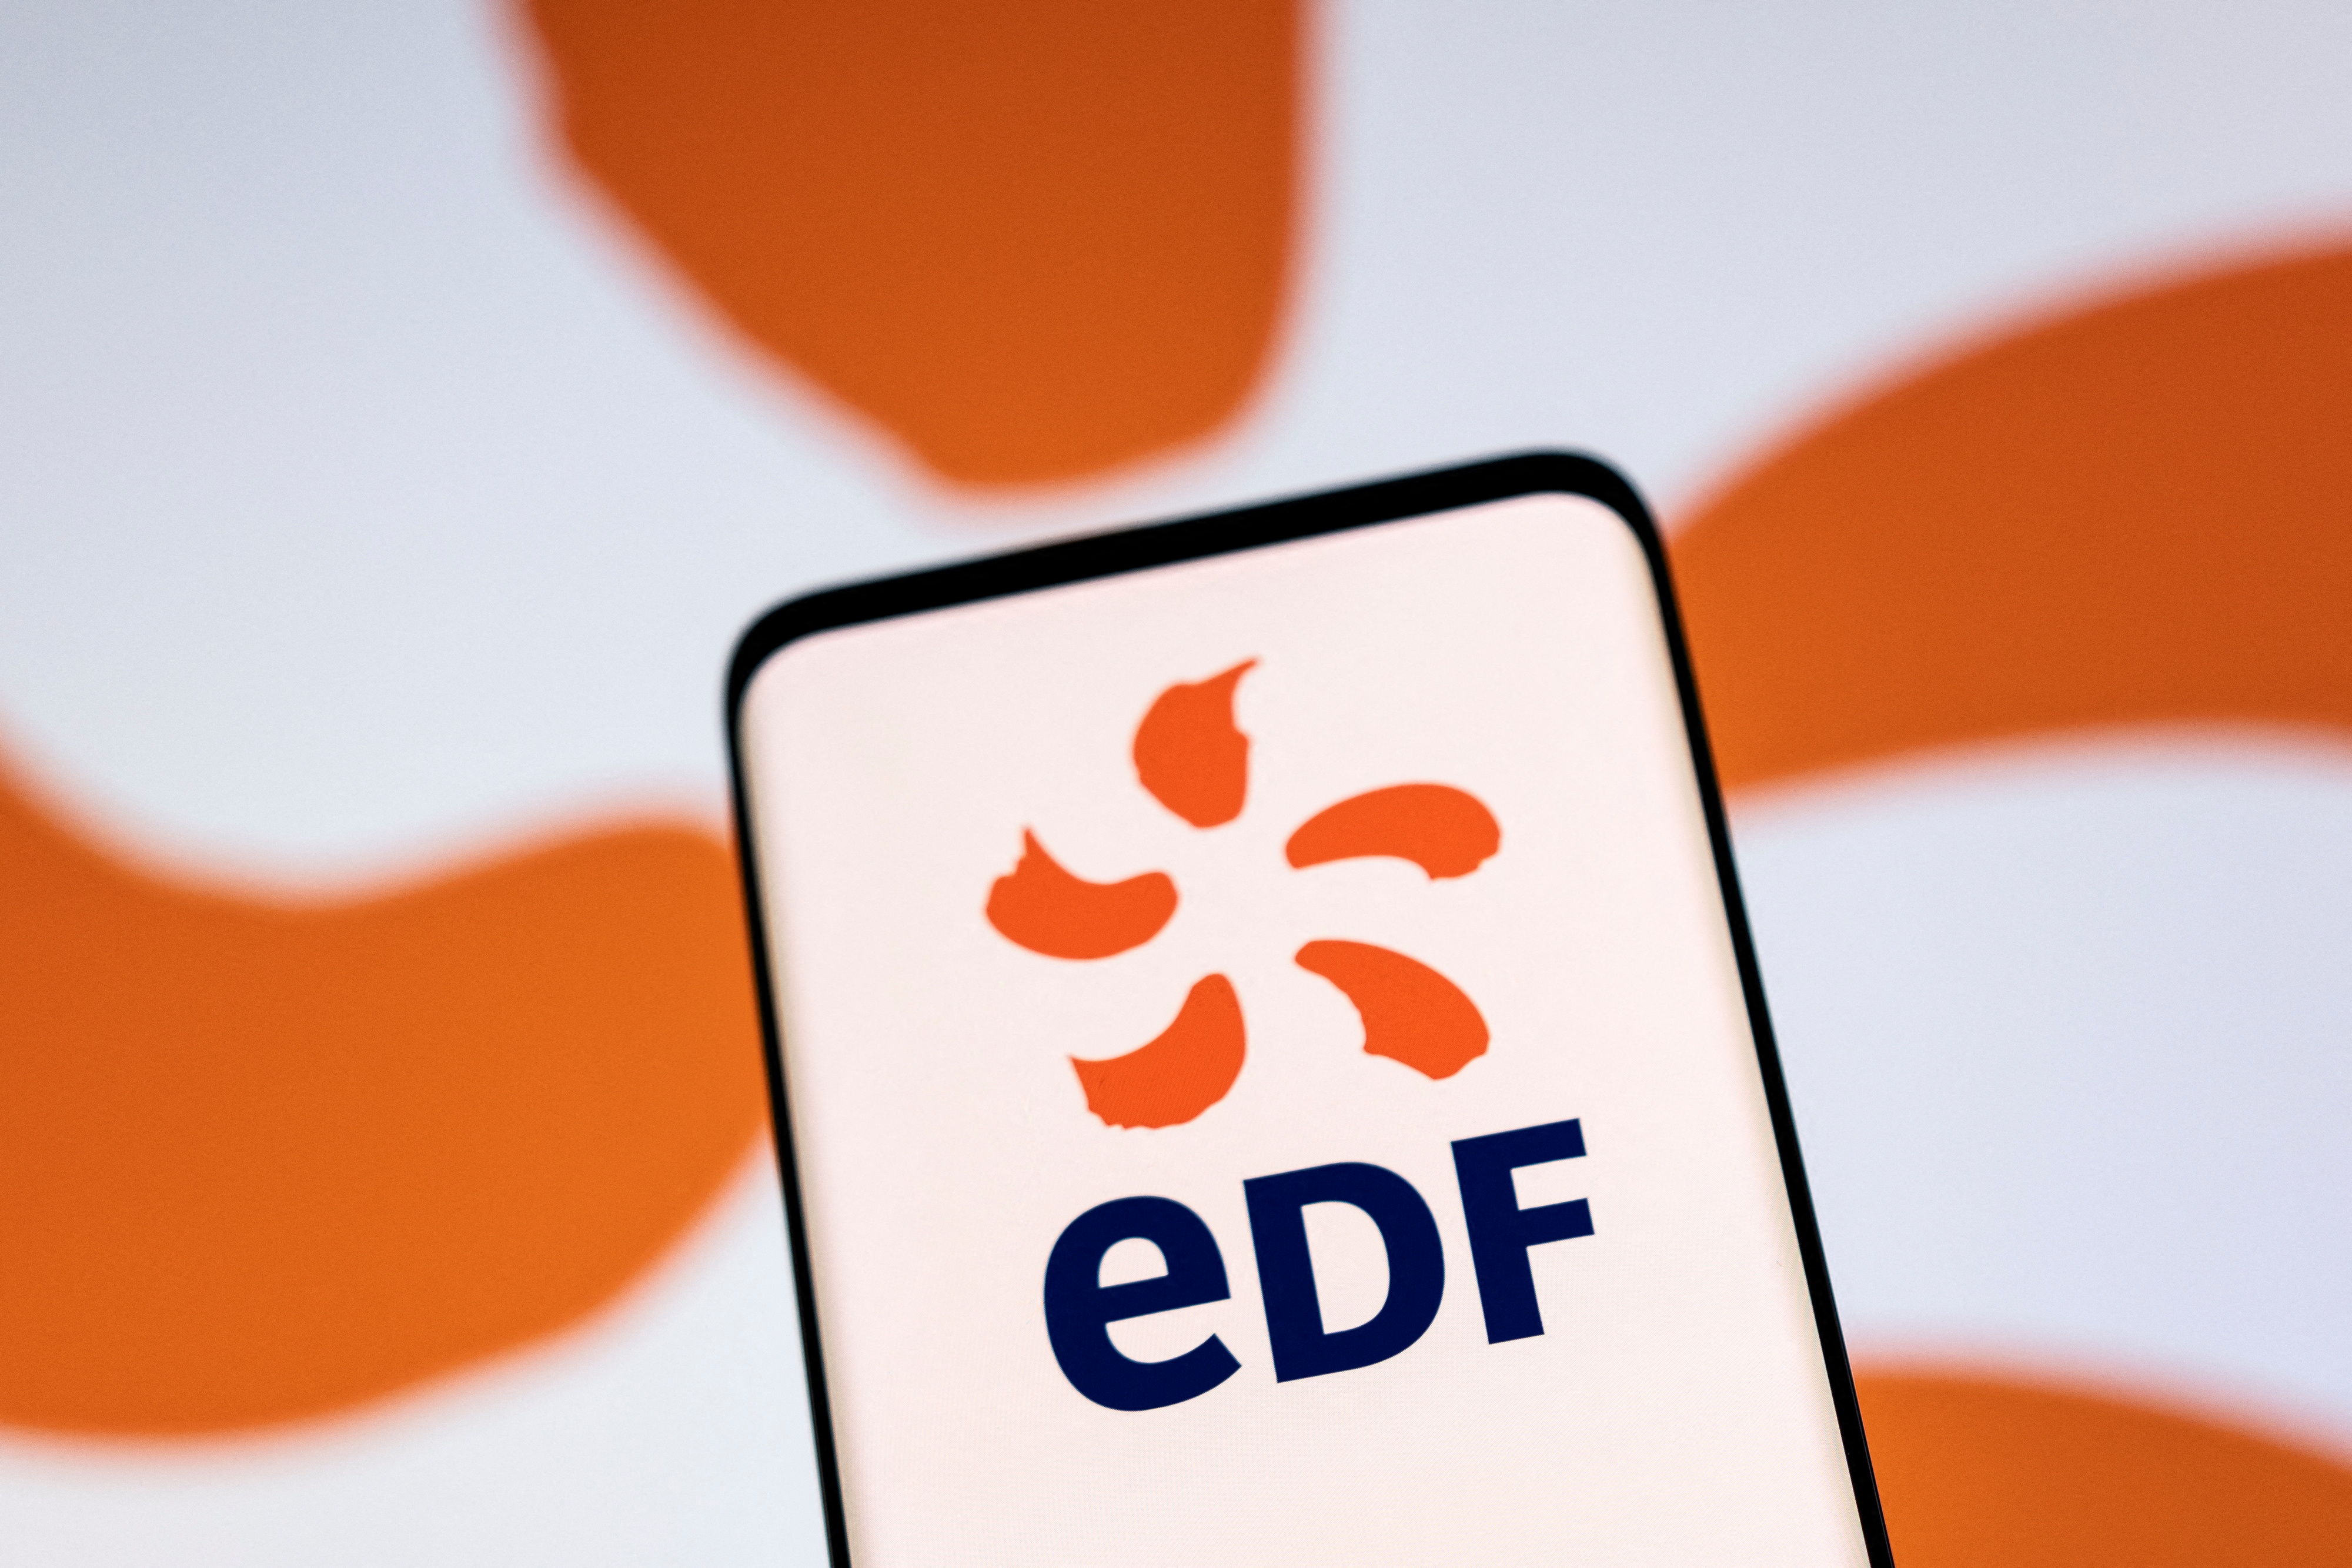 Illustration shows EDF logo